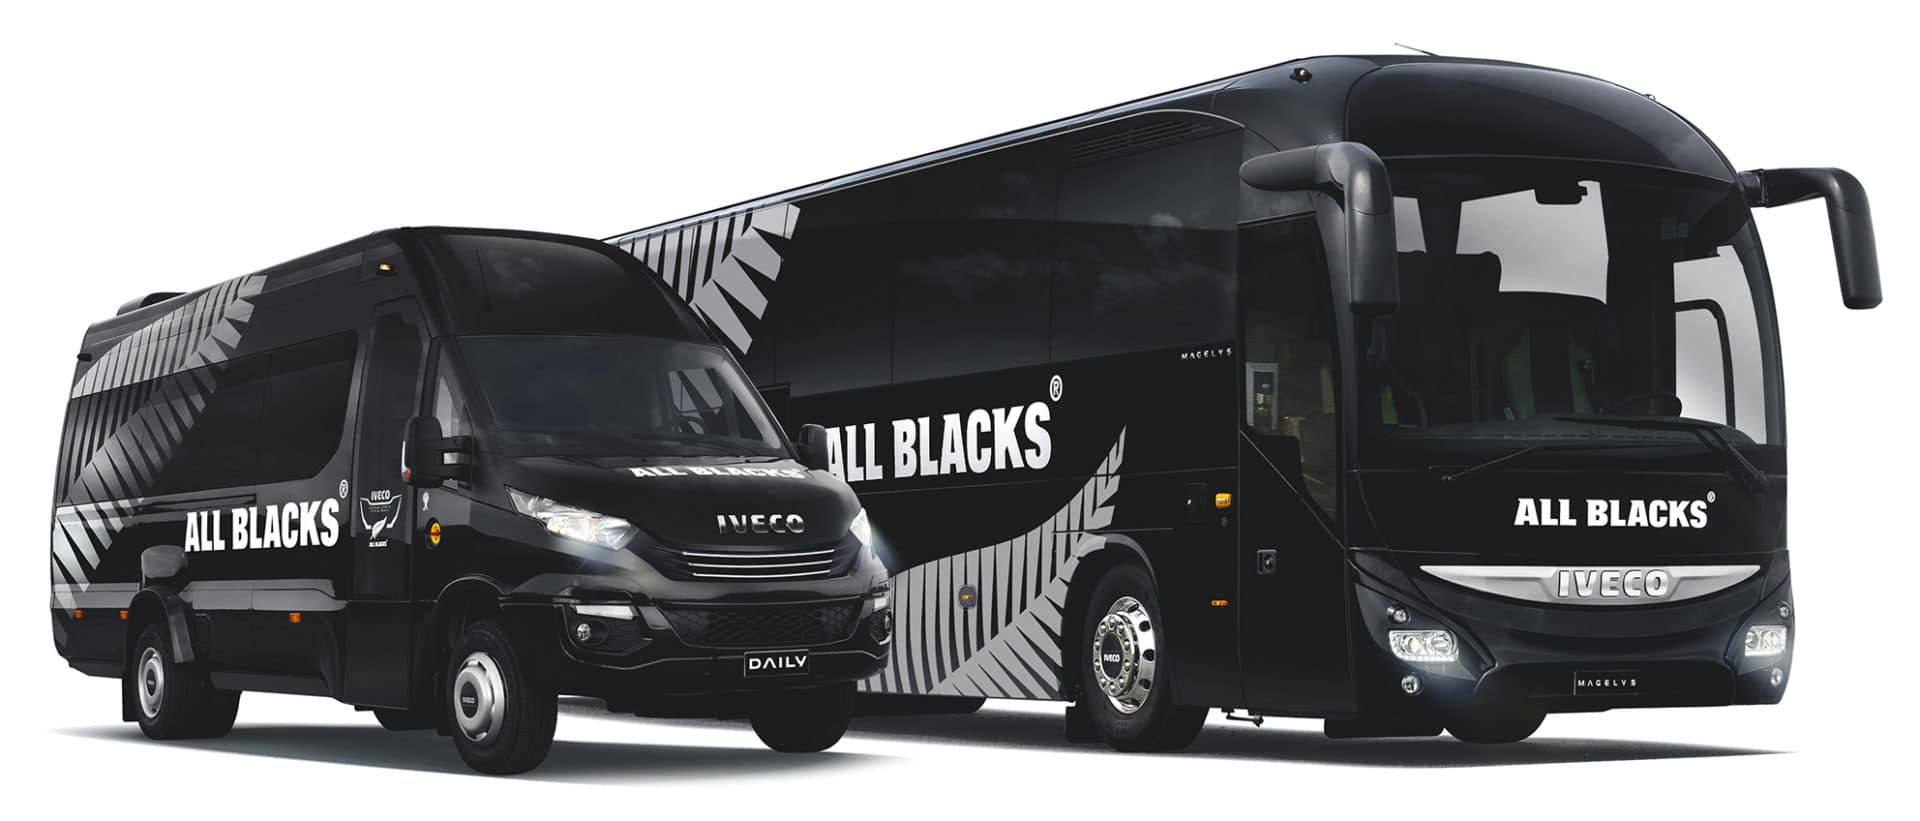 IVECO vervoert All Blacks bij de Vista 2017 All Blacks Northern Tour